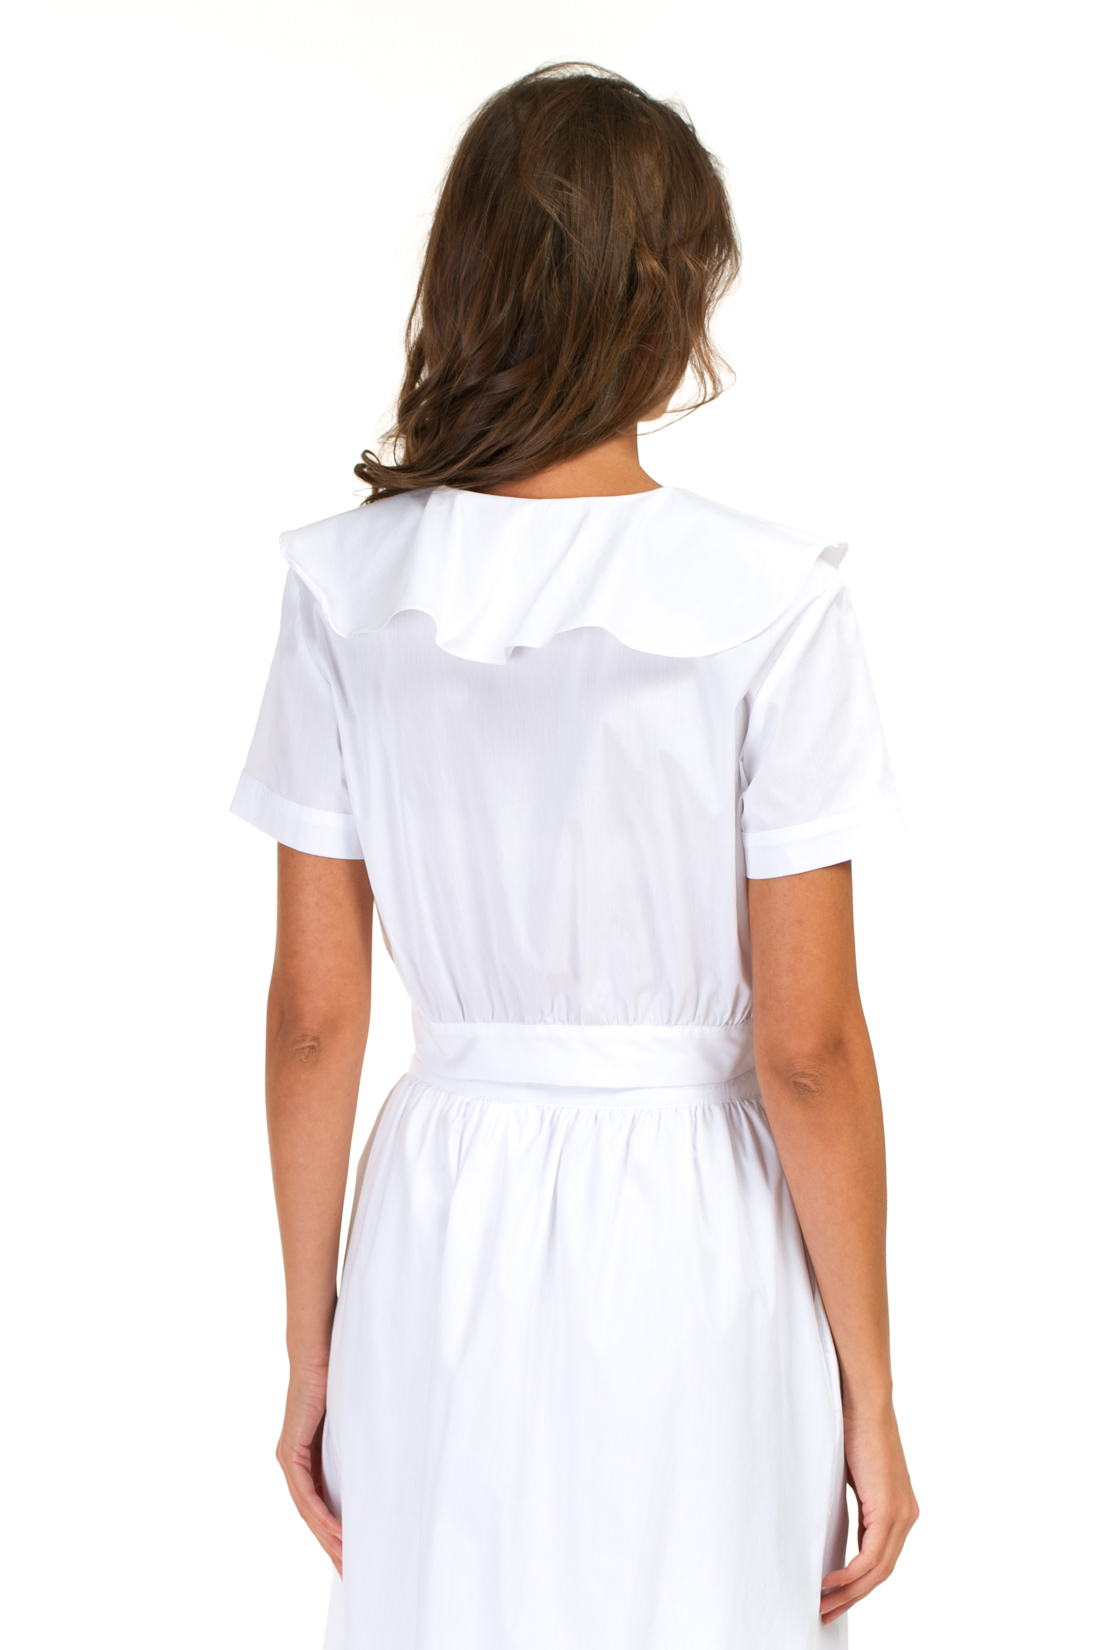 Укороченная блузка с воланом (арт. baon B197042), размер XL, цвет белый Укороченная блузка с воланом (арт. baon B197042) - фото 2